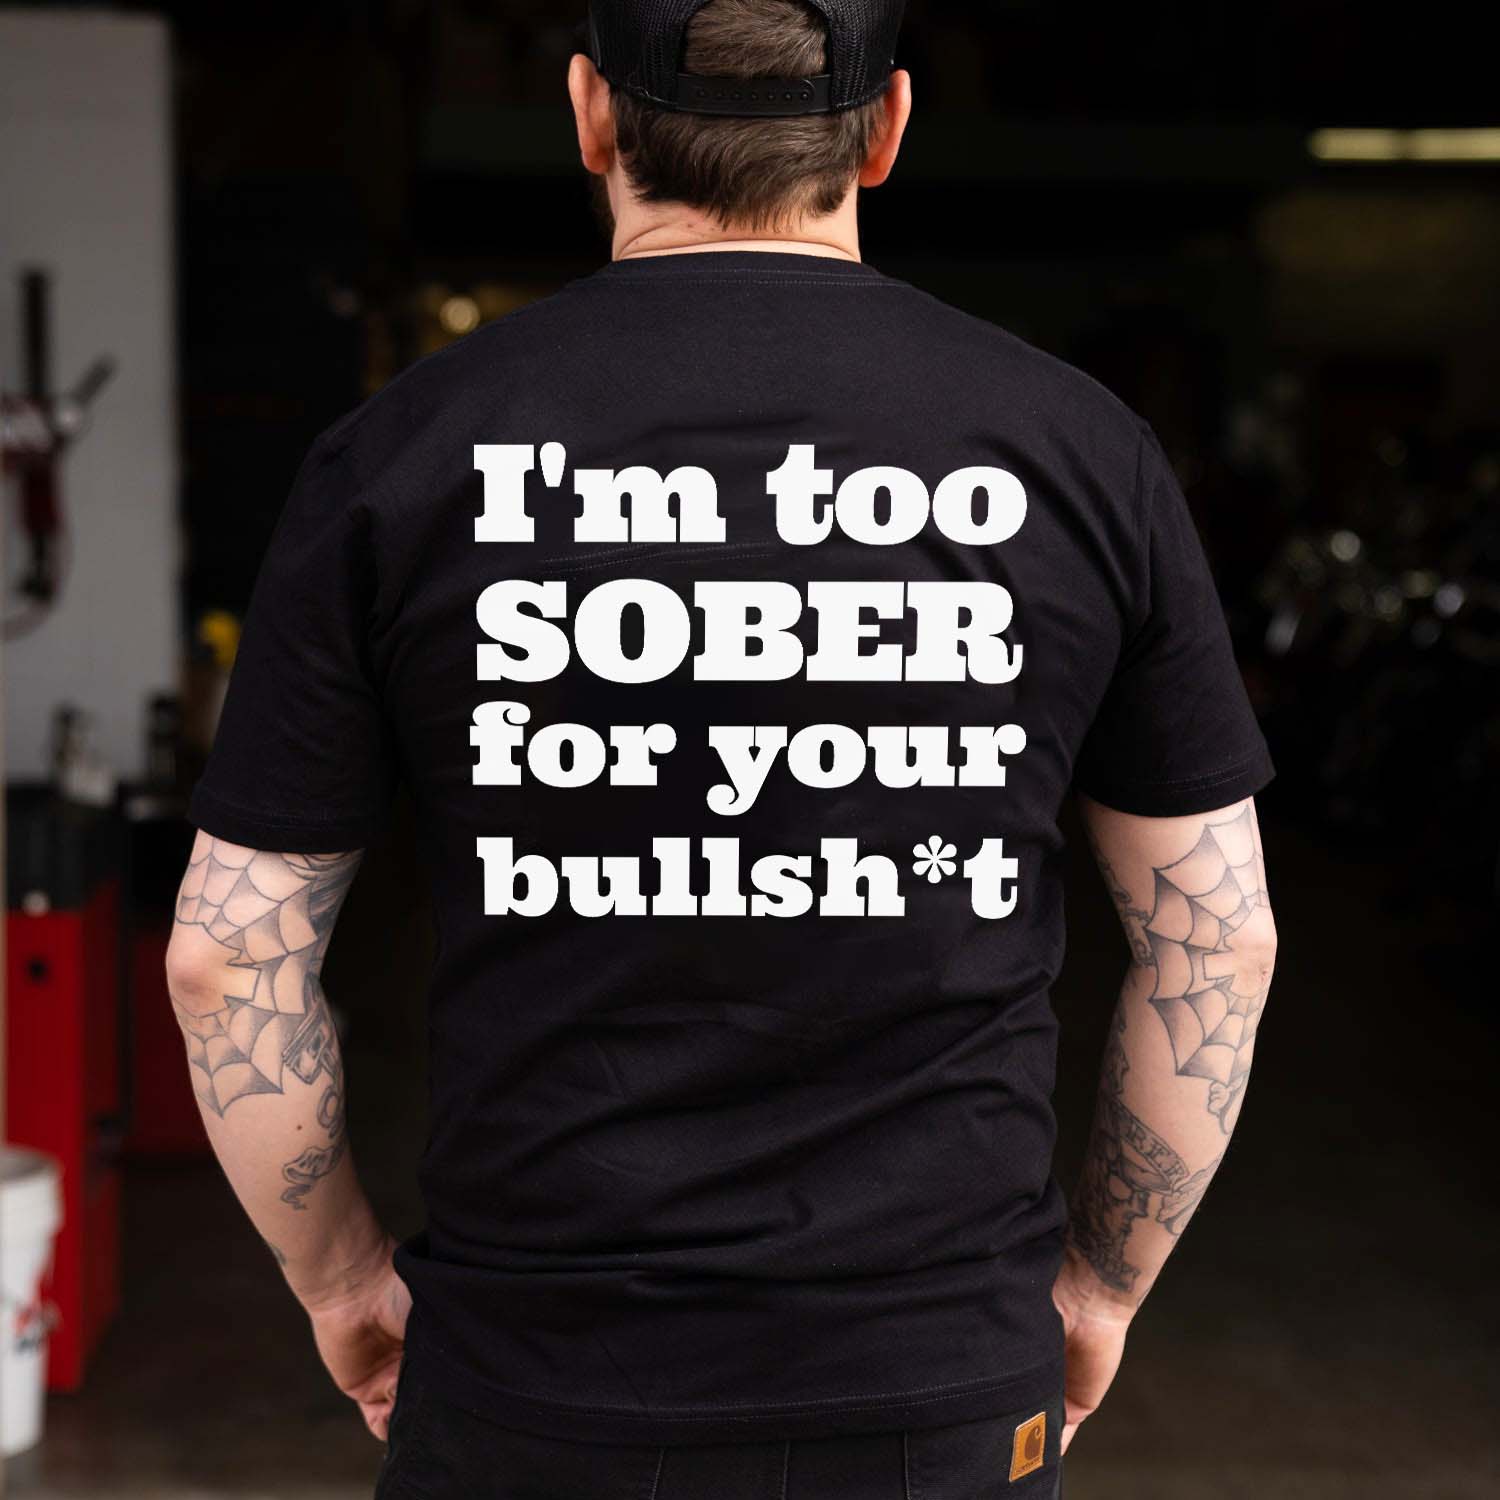 I'm Too Sober For Your Bullish*t Printed Men's T-shirt